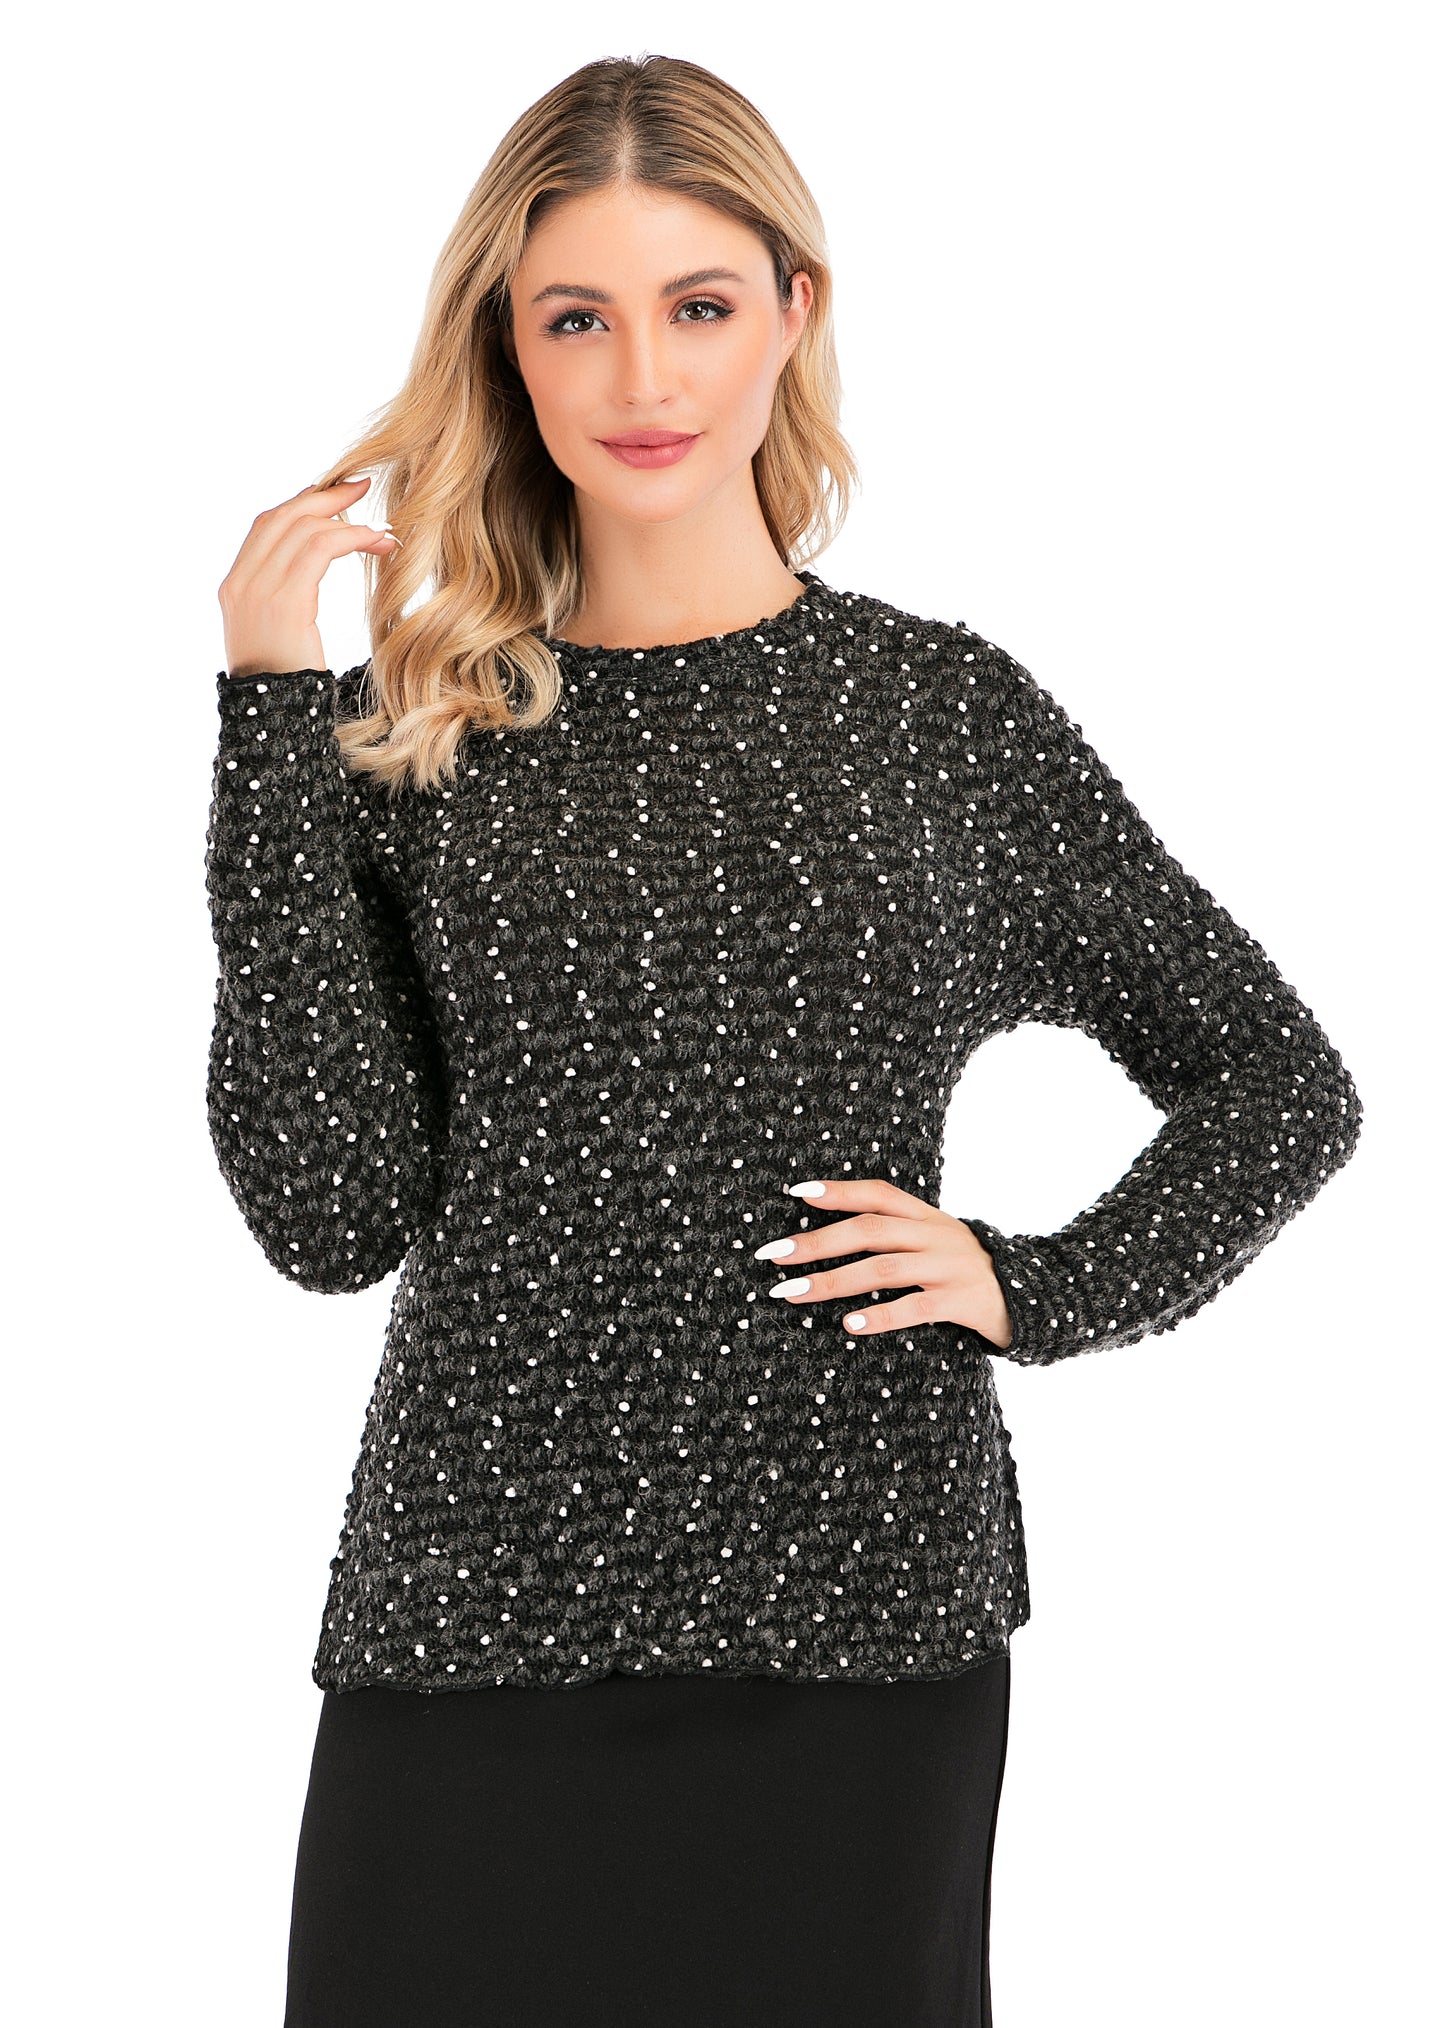 Elegant Black & White Long Sleeve Sweater - MissFinchNYC